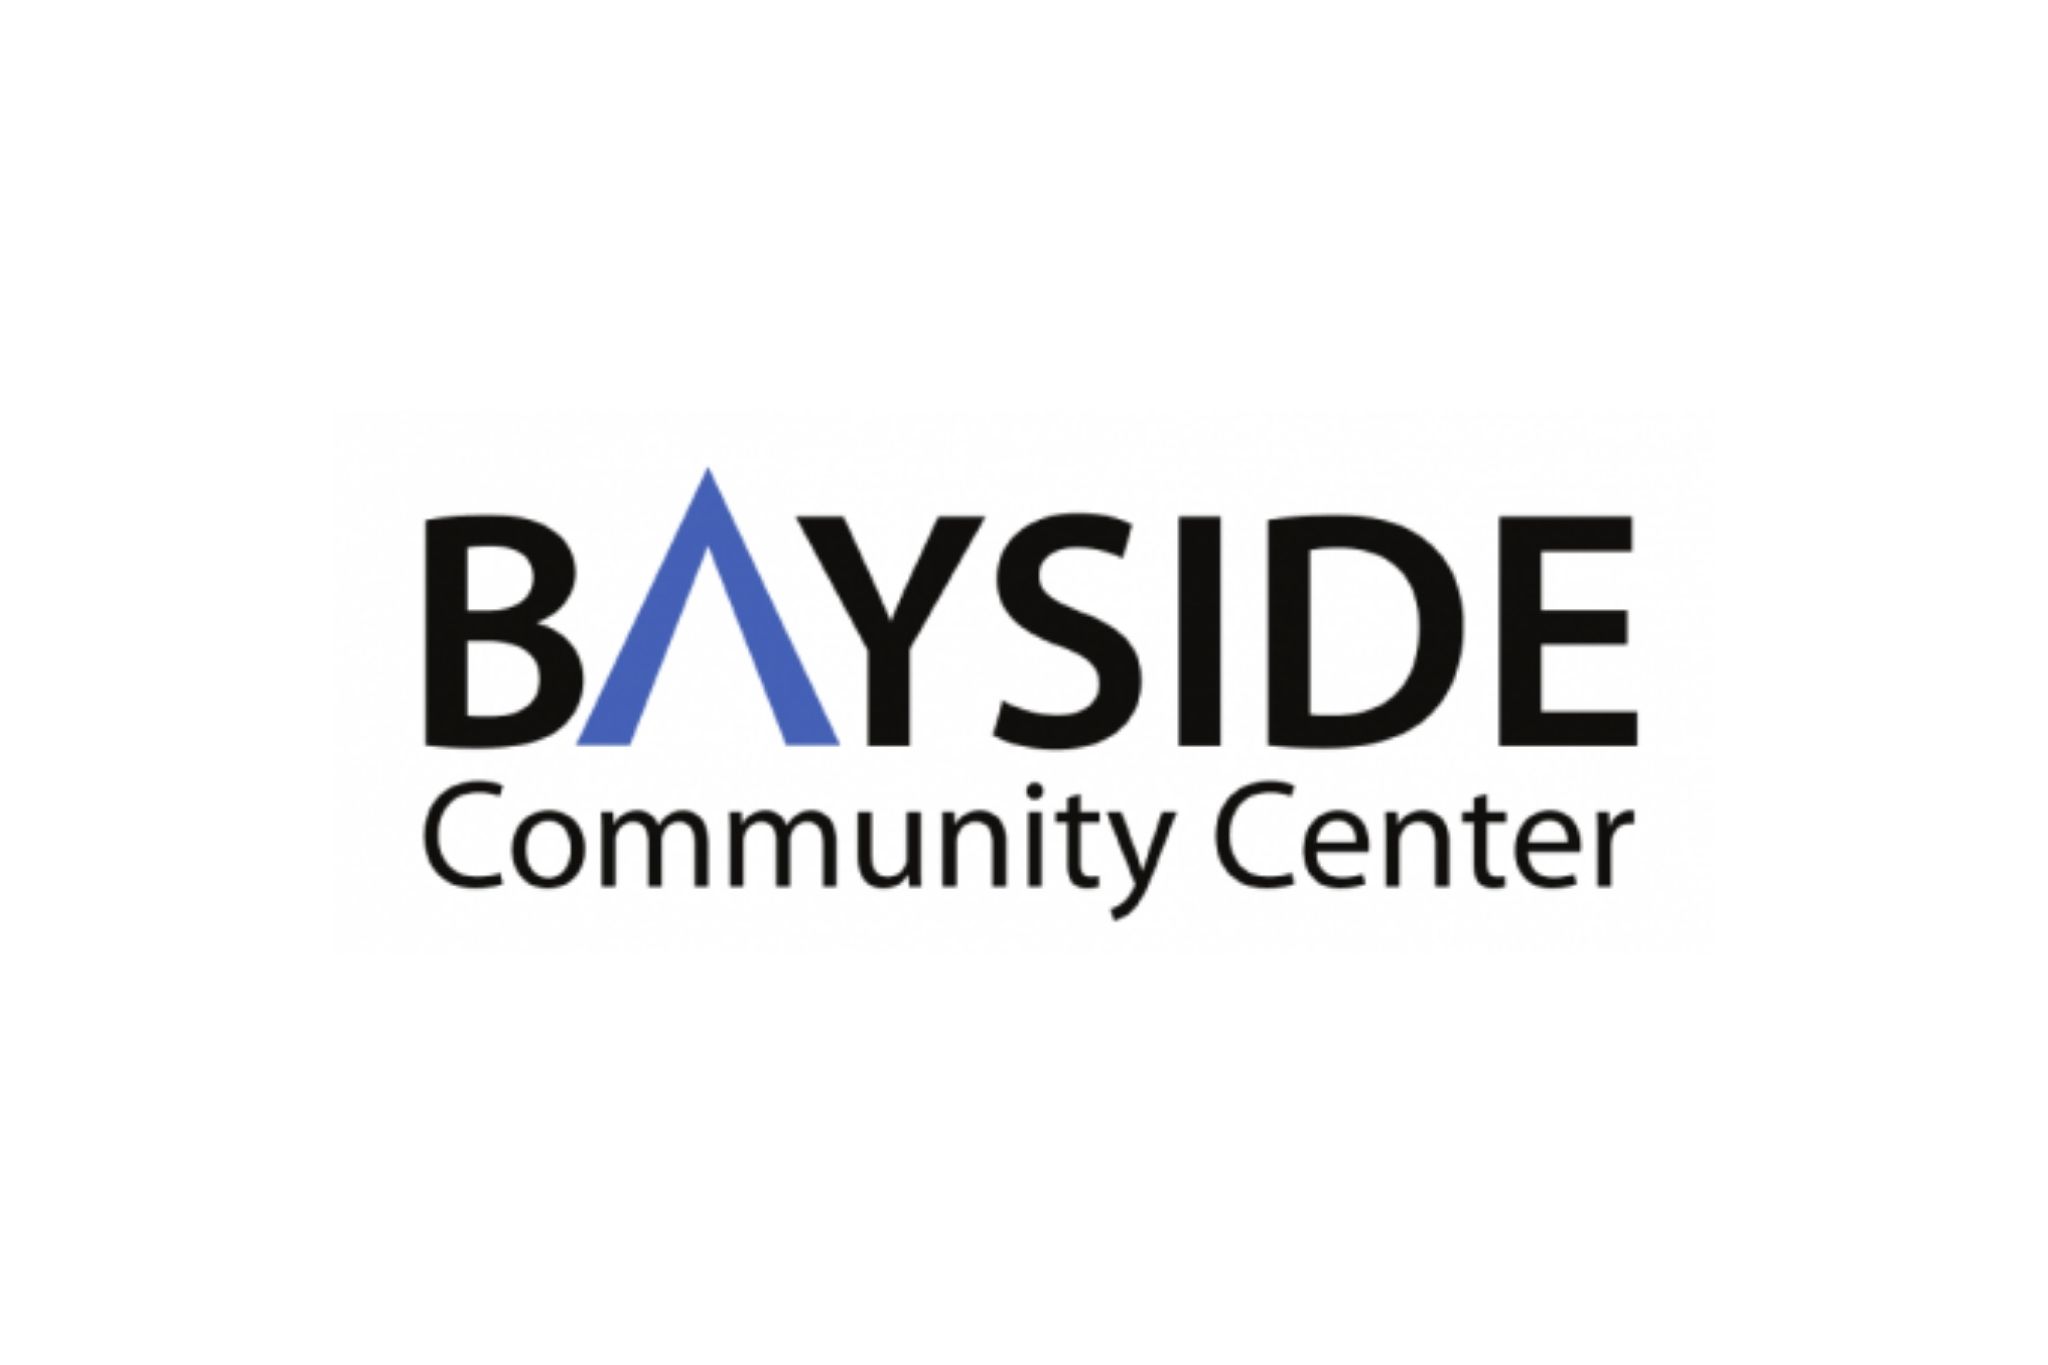 Bayside community center